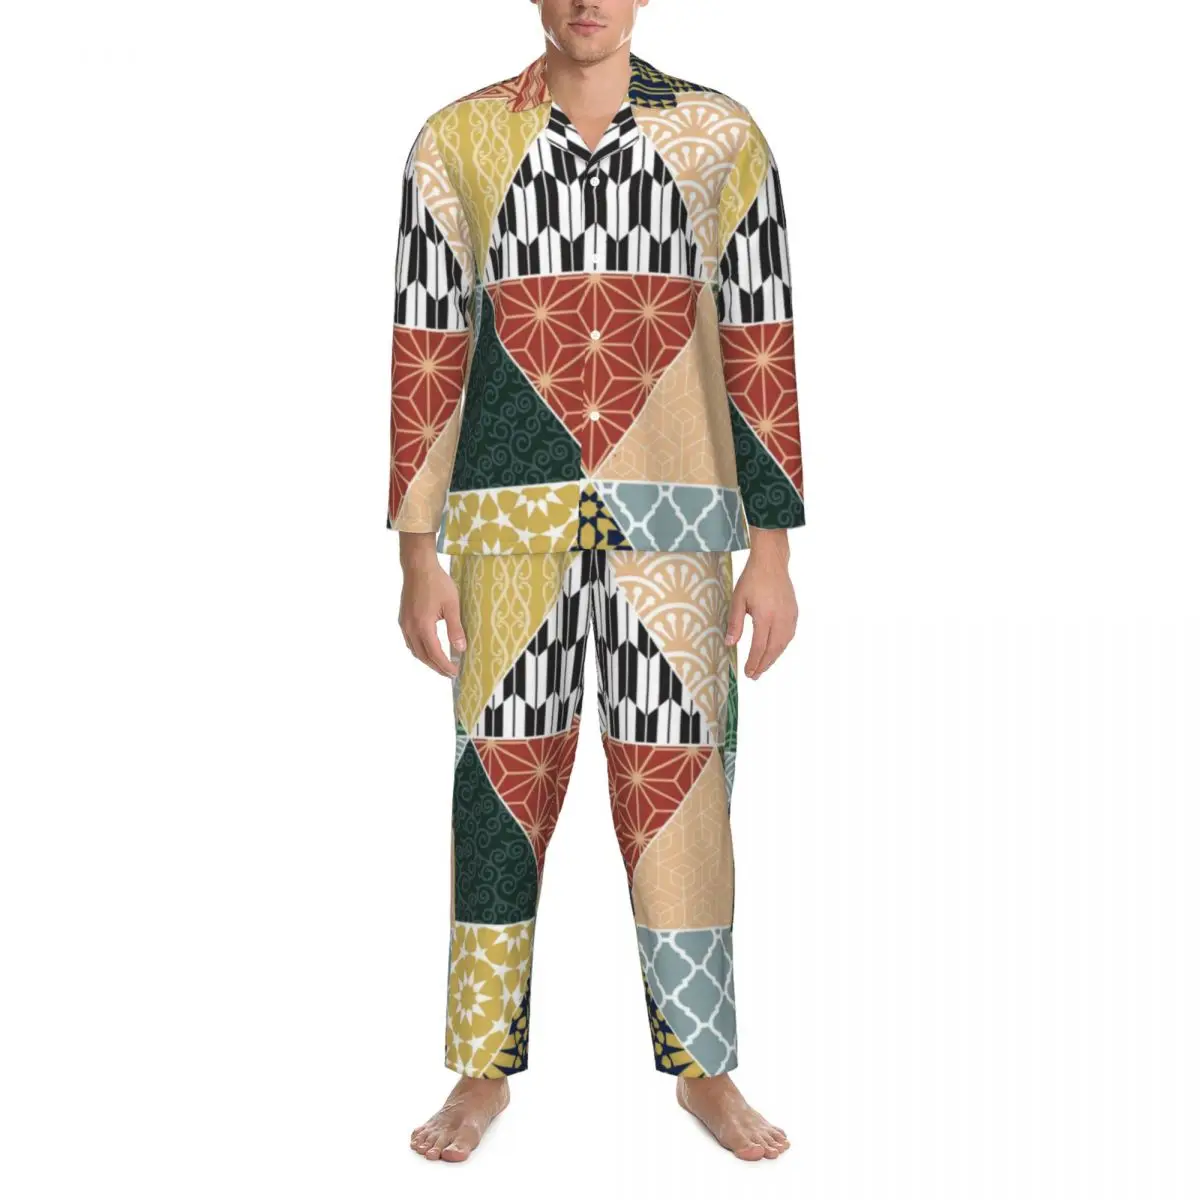 

Colorful Patchwork Sleepwear Autumn Tribal Ethnic Print Casual Oversize Pajamas Set Men Long Sleeves Comfortable Sleep Nightwear